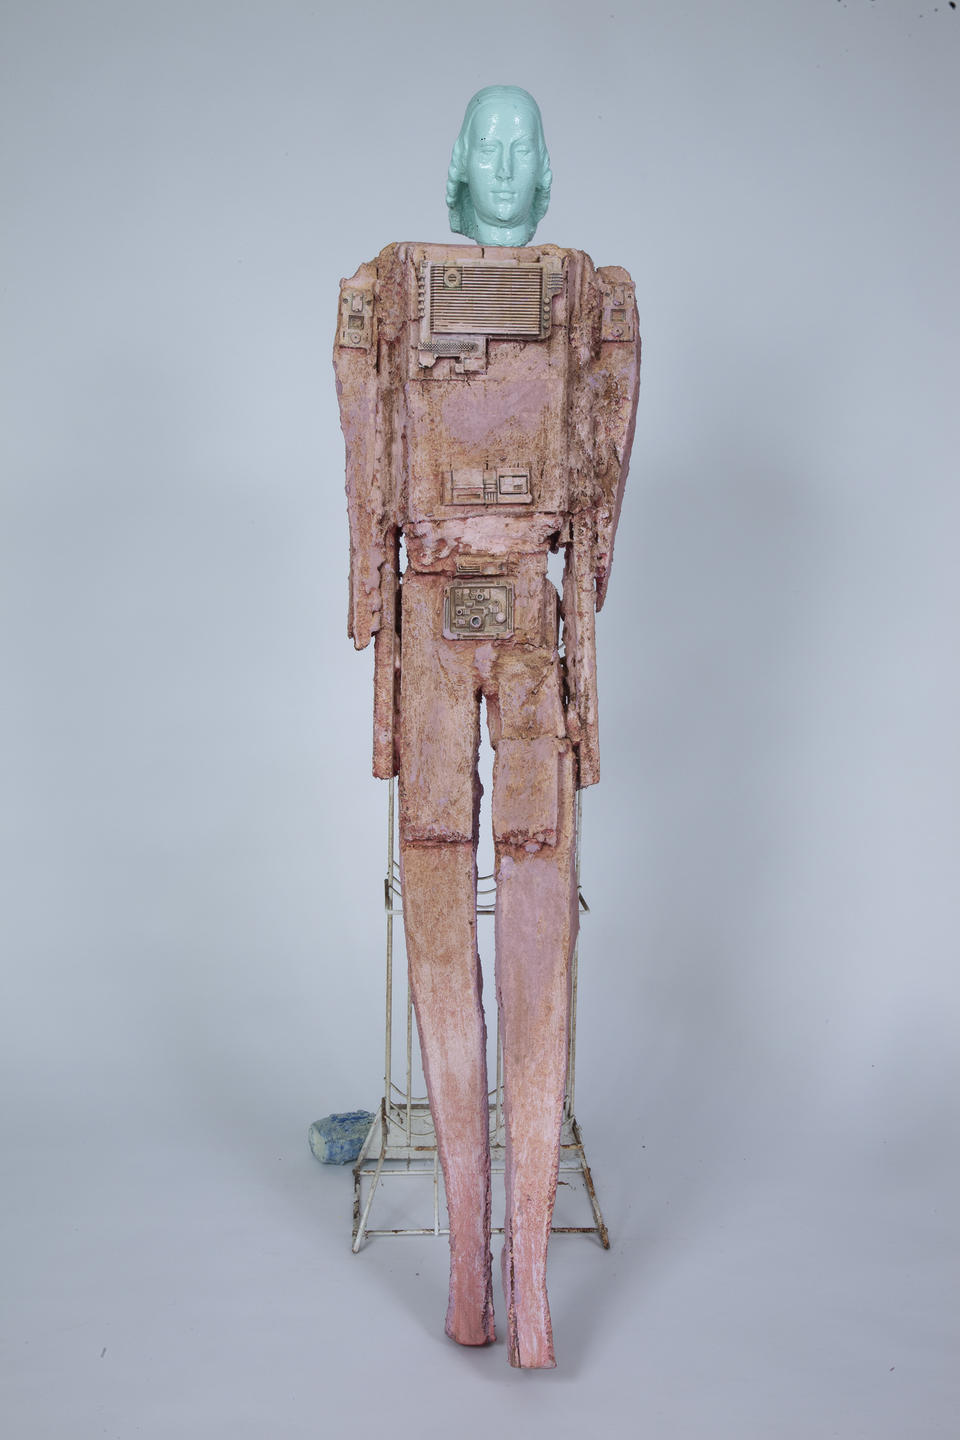 pink robotic figure leaning on wine rack